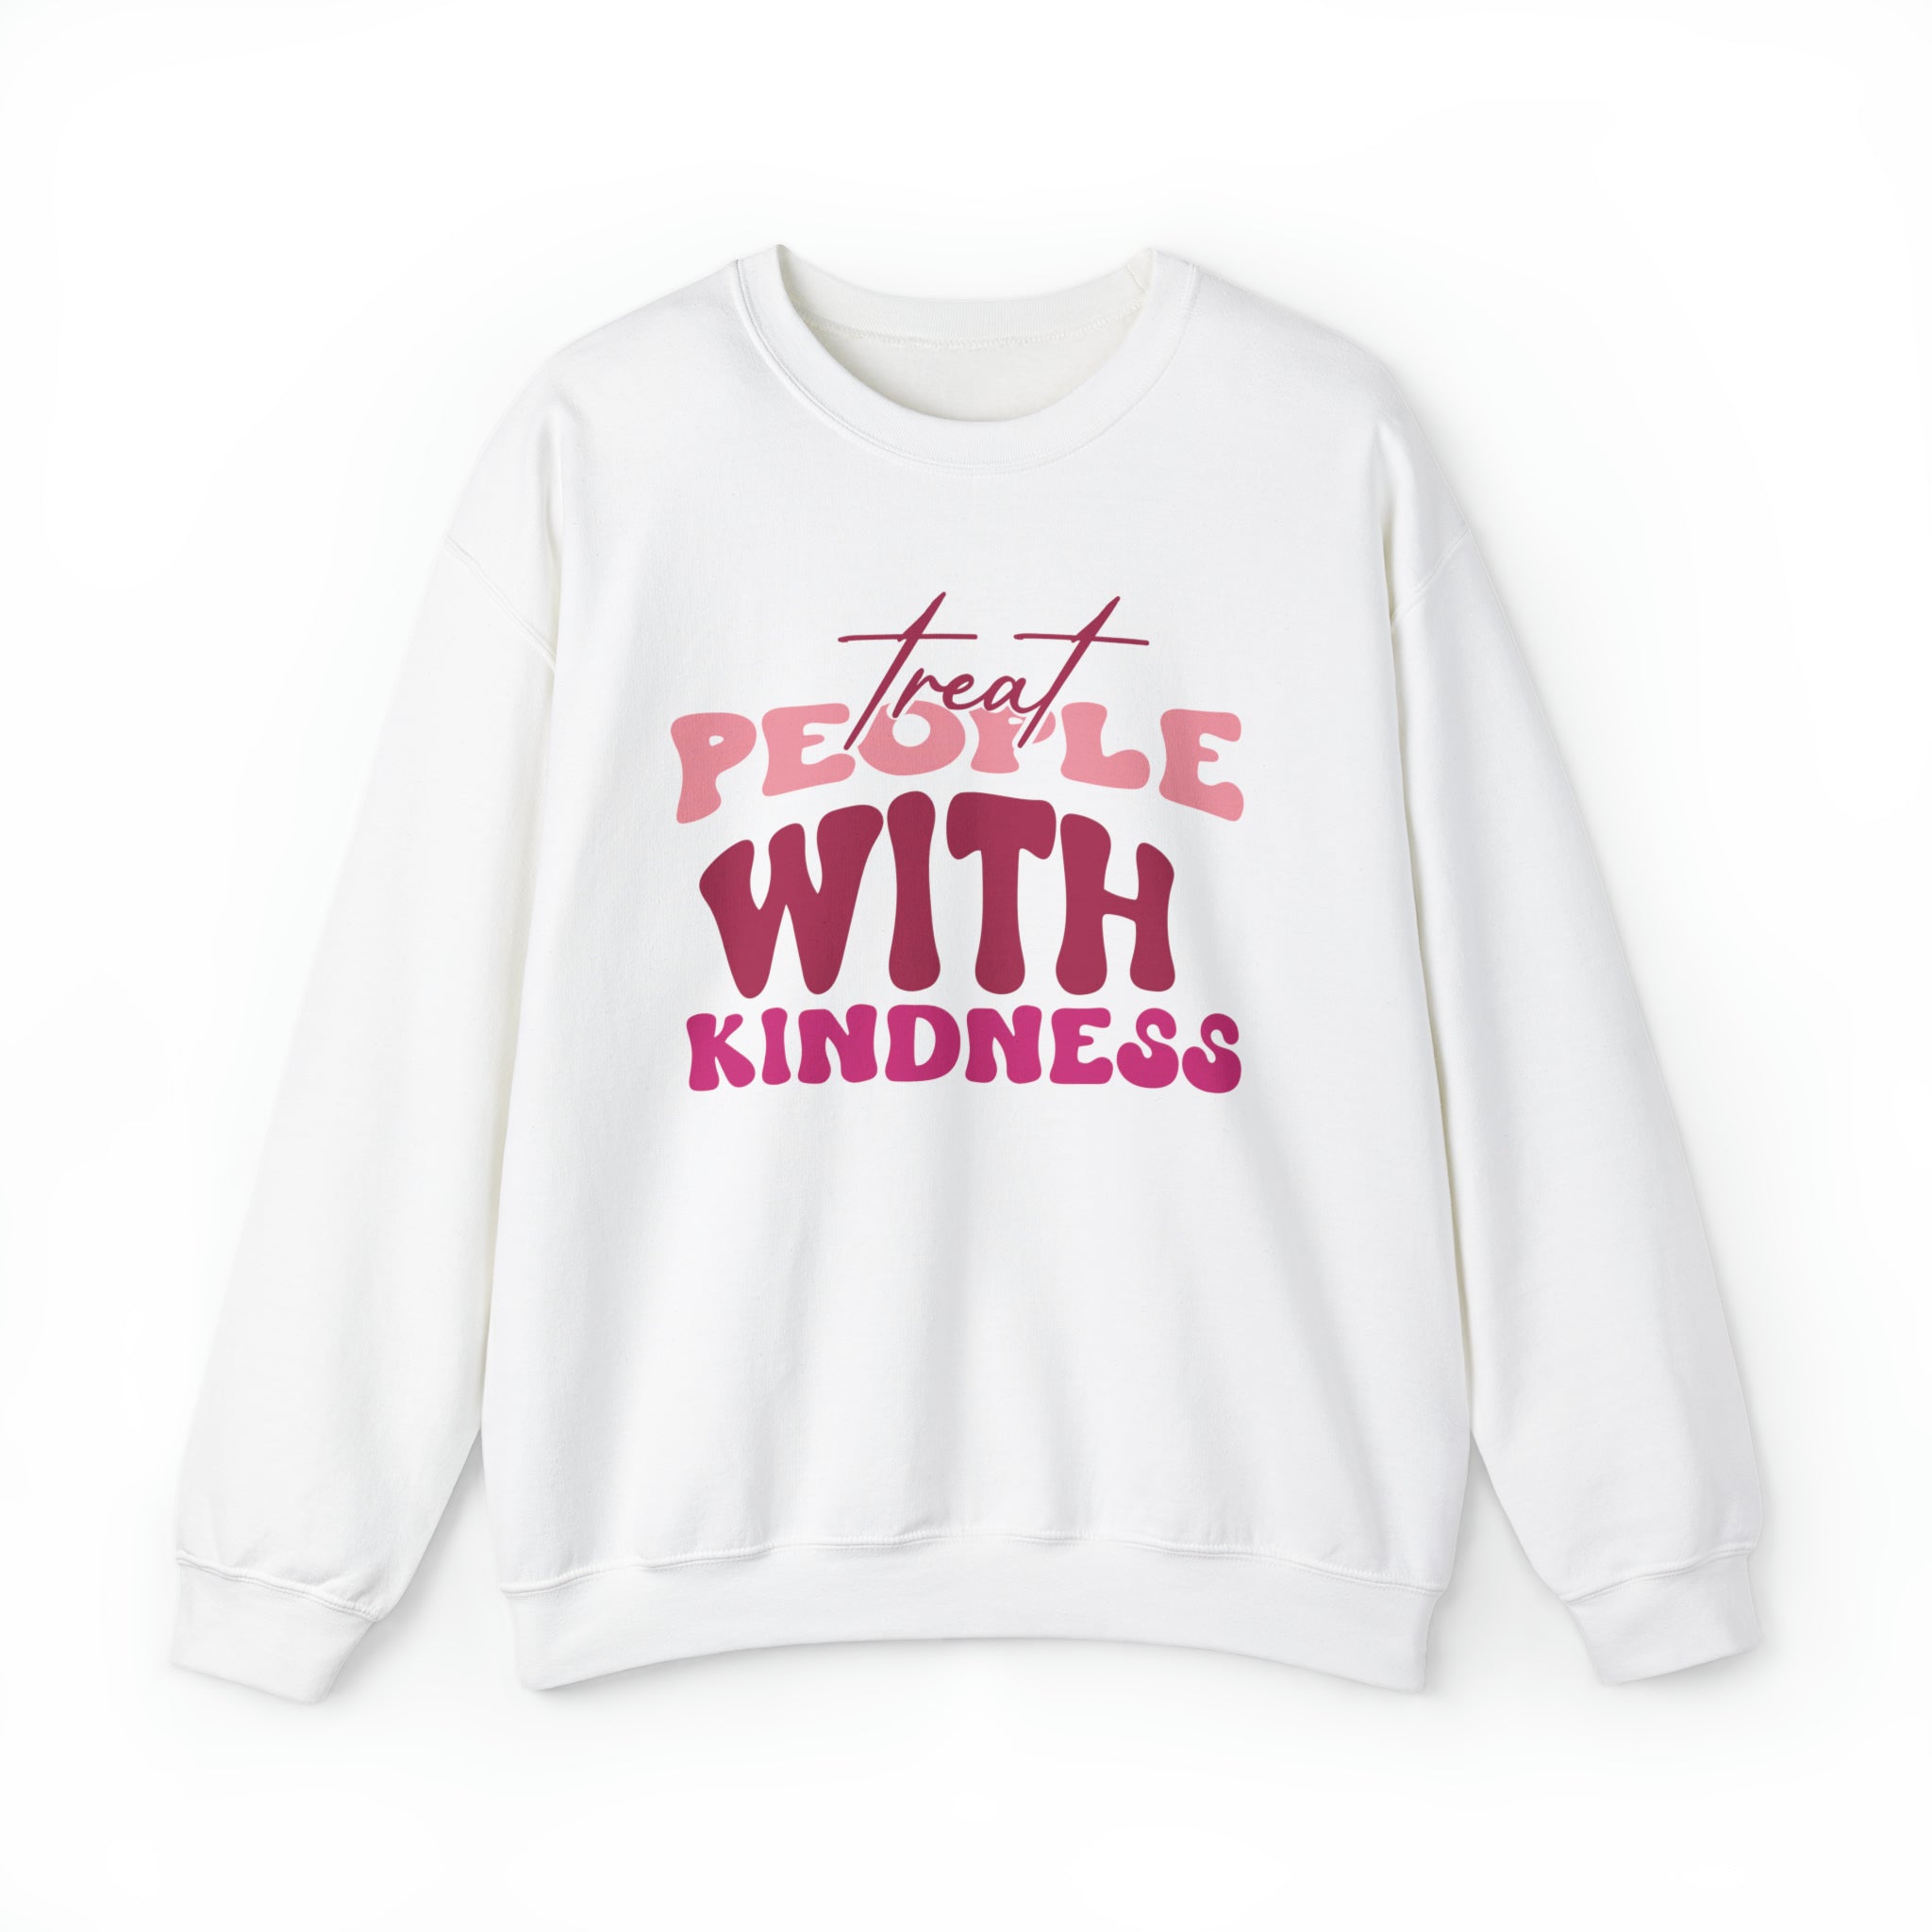 Treat People with Kindness Crewneck Sweatshirt - Behibrid